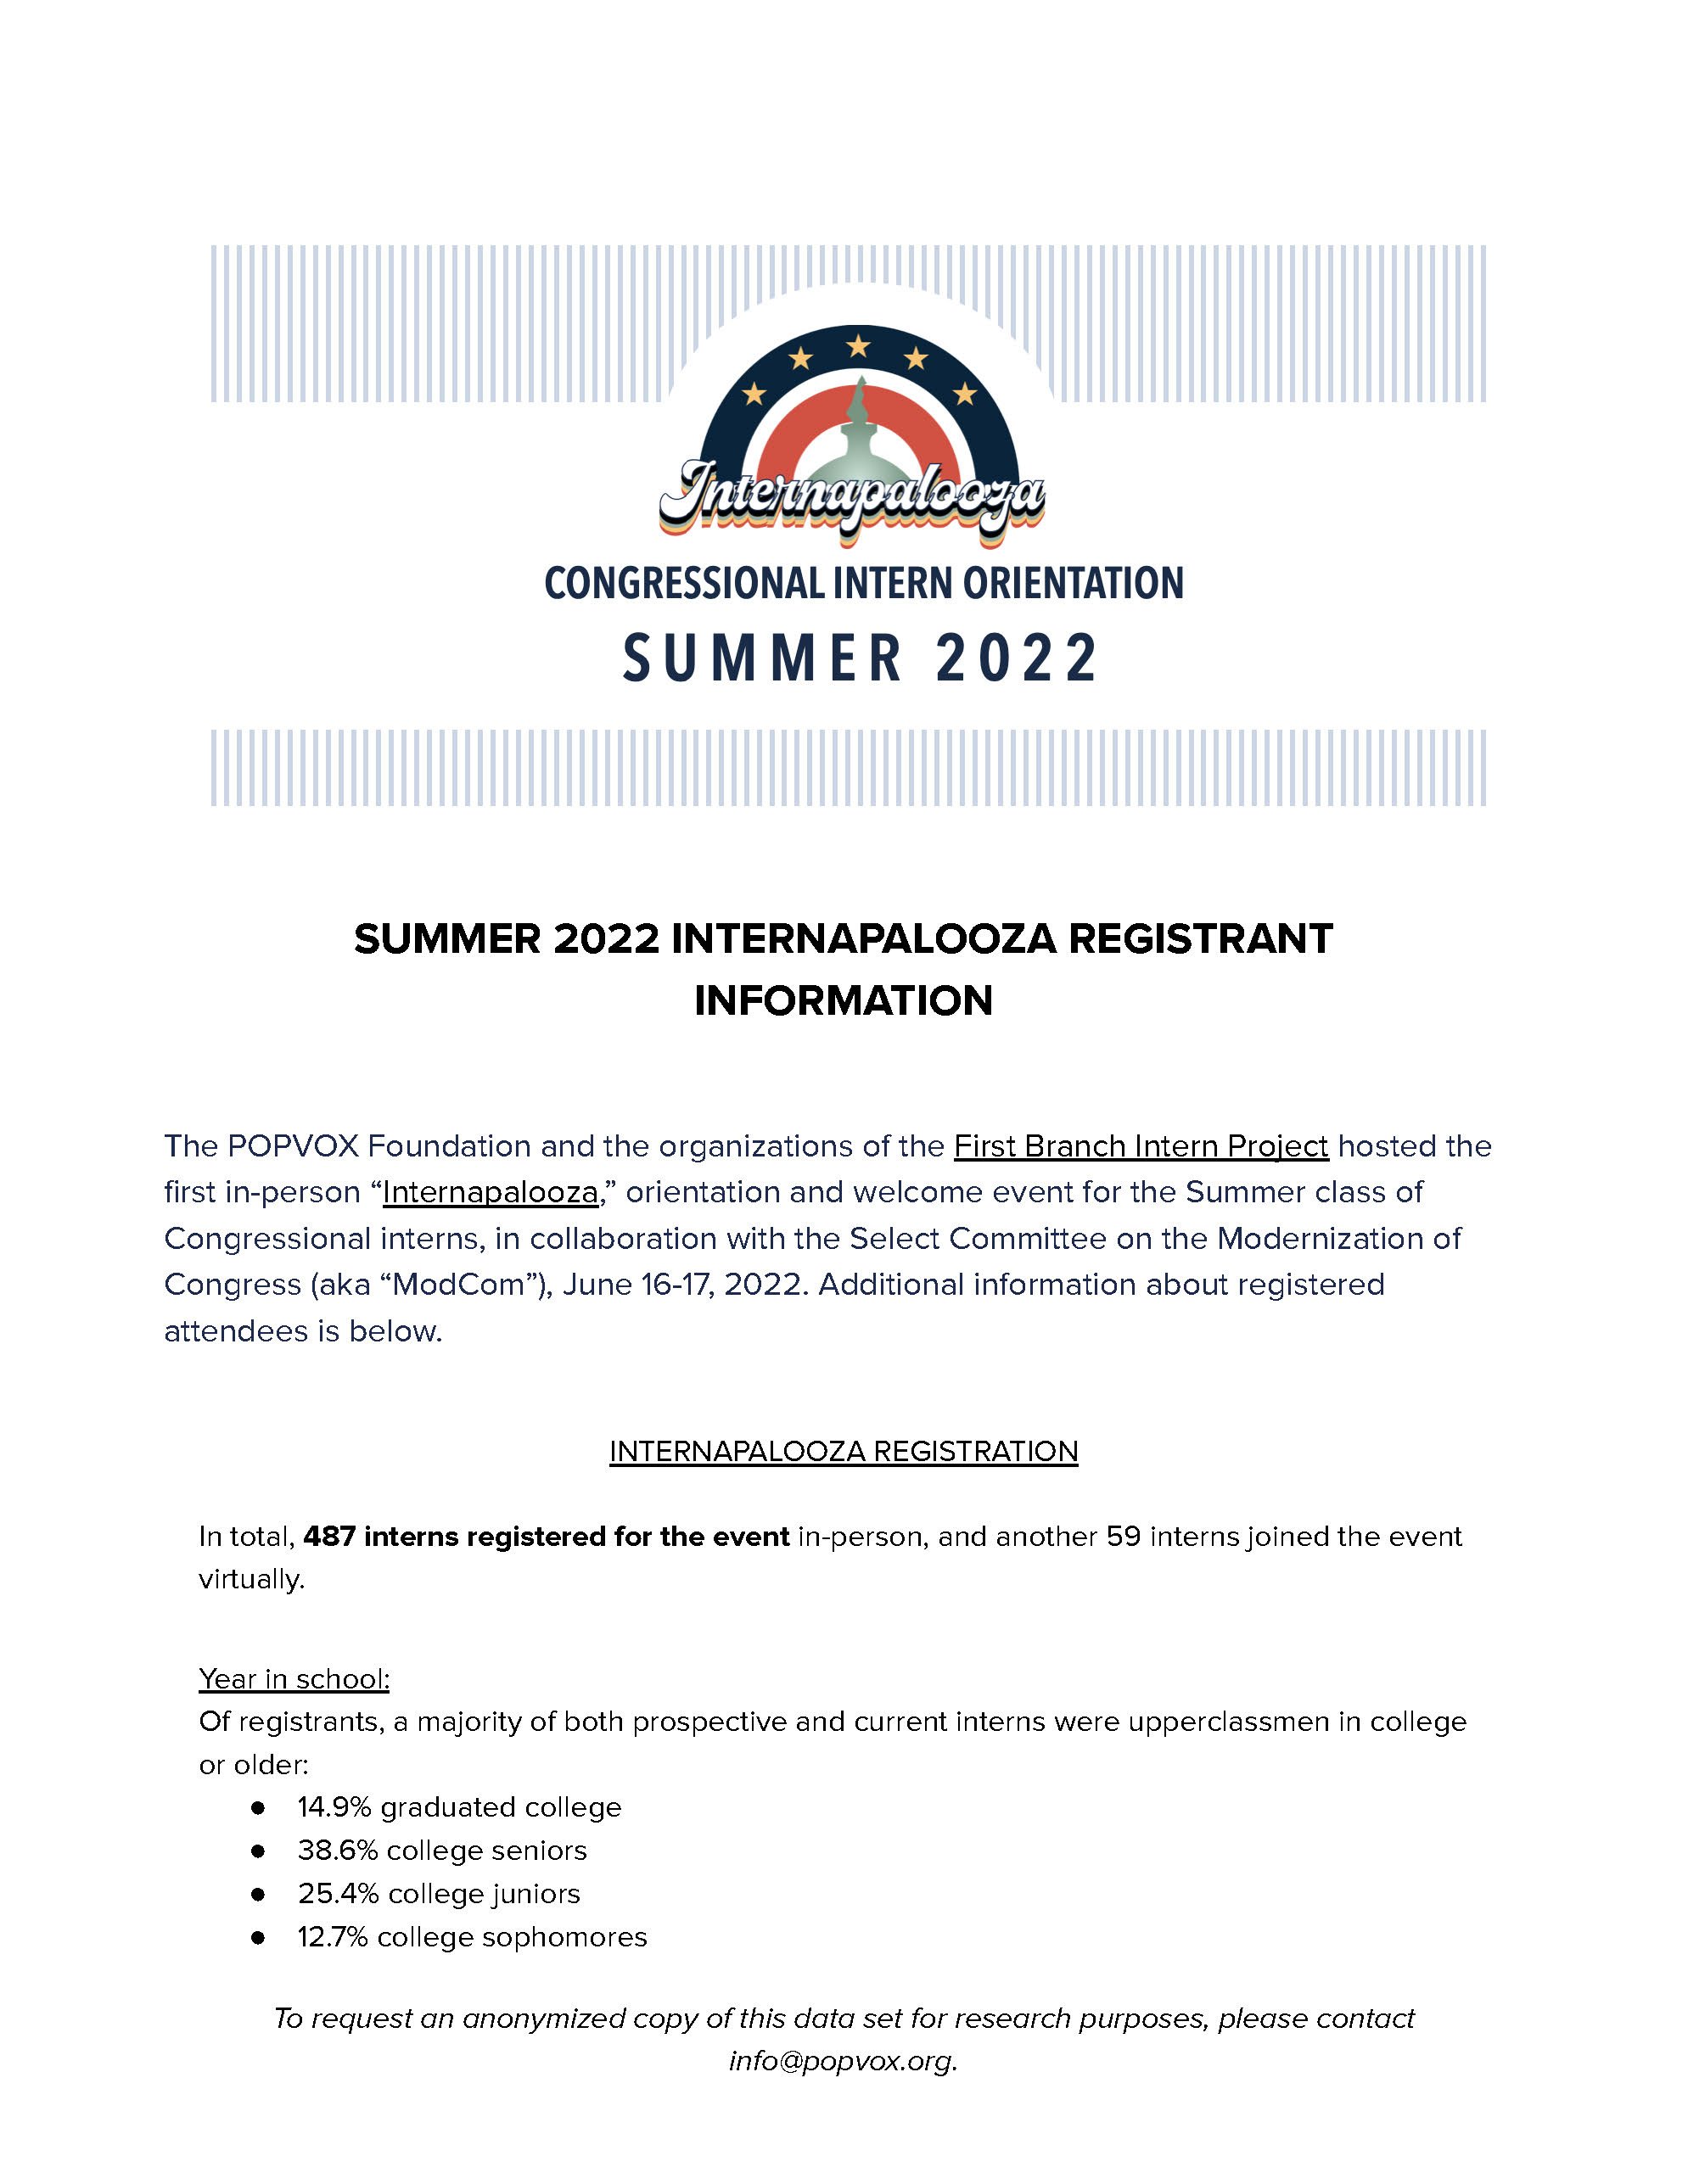 Summer 22 Internapalooza Fact Sheet_Page_1.jpg